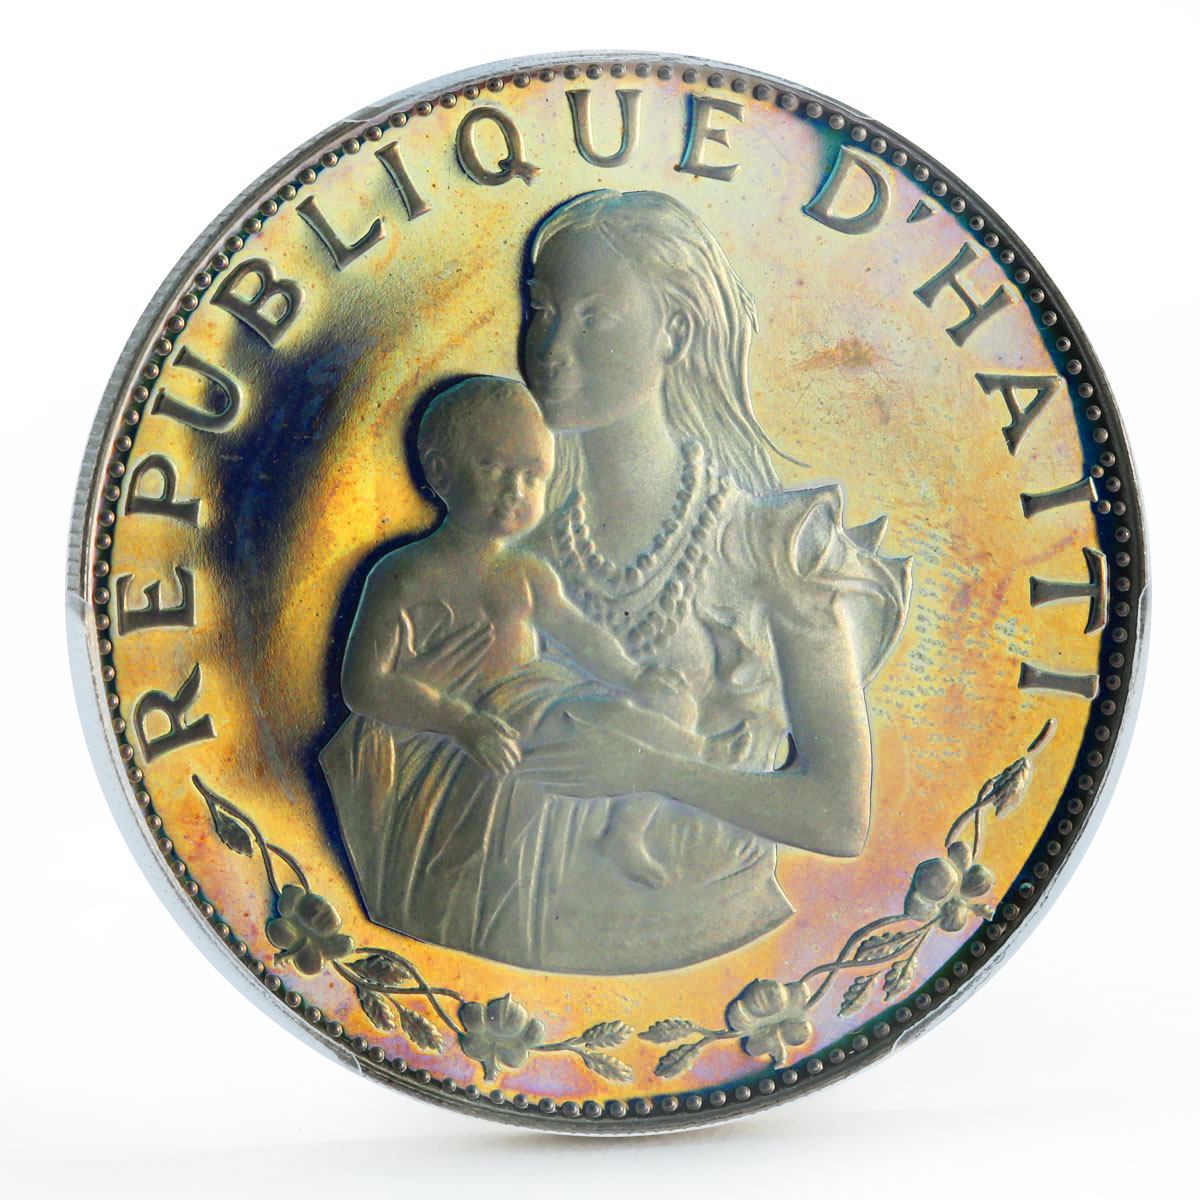 Haiti 50 gourdes The Mother PR67 PCGS Rainbow Reflectivity silver coin 1973